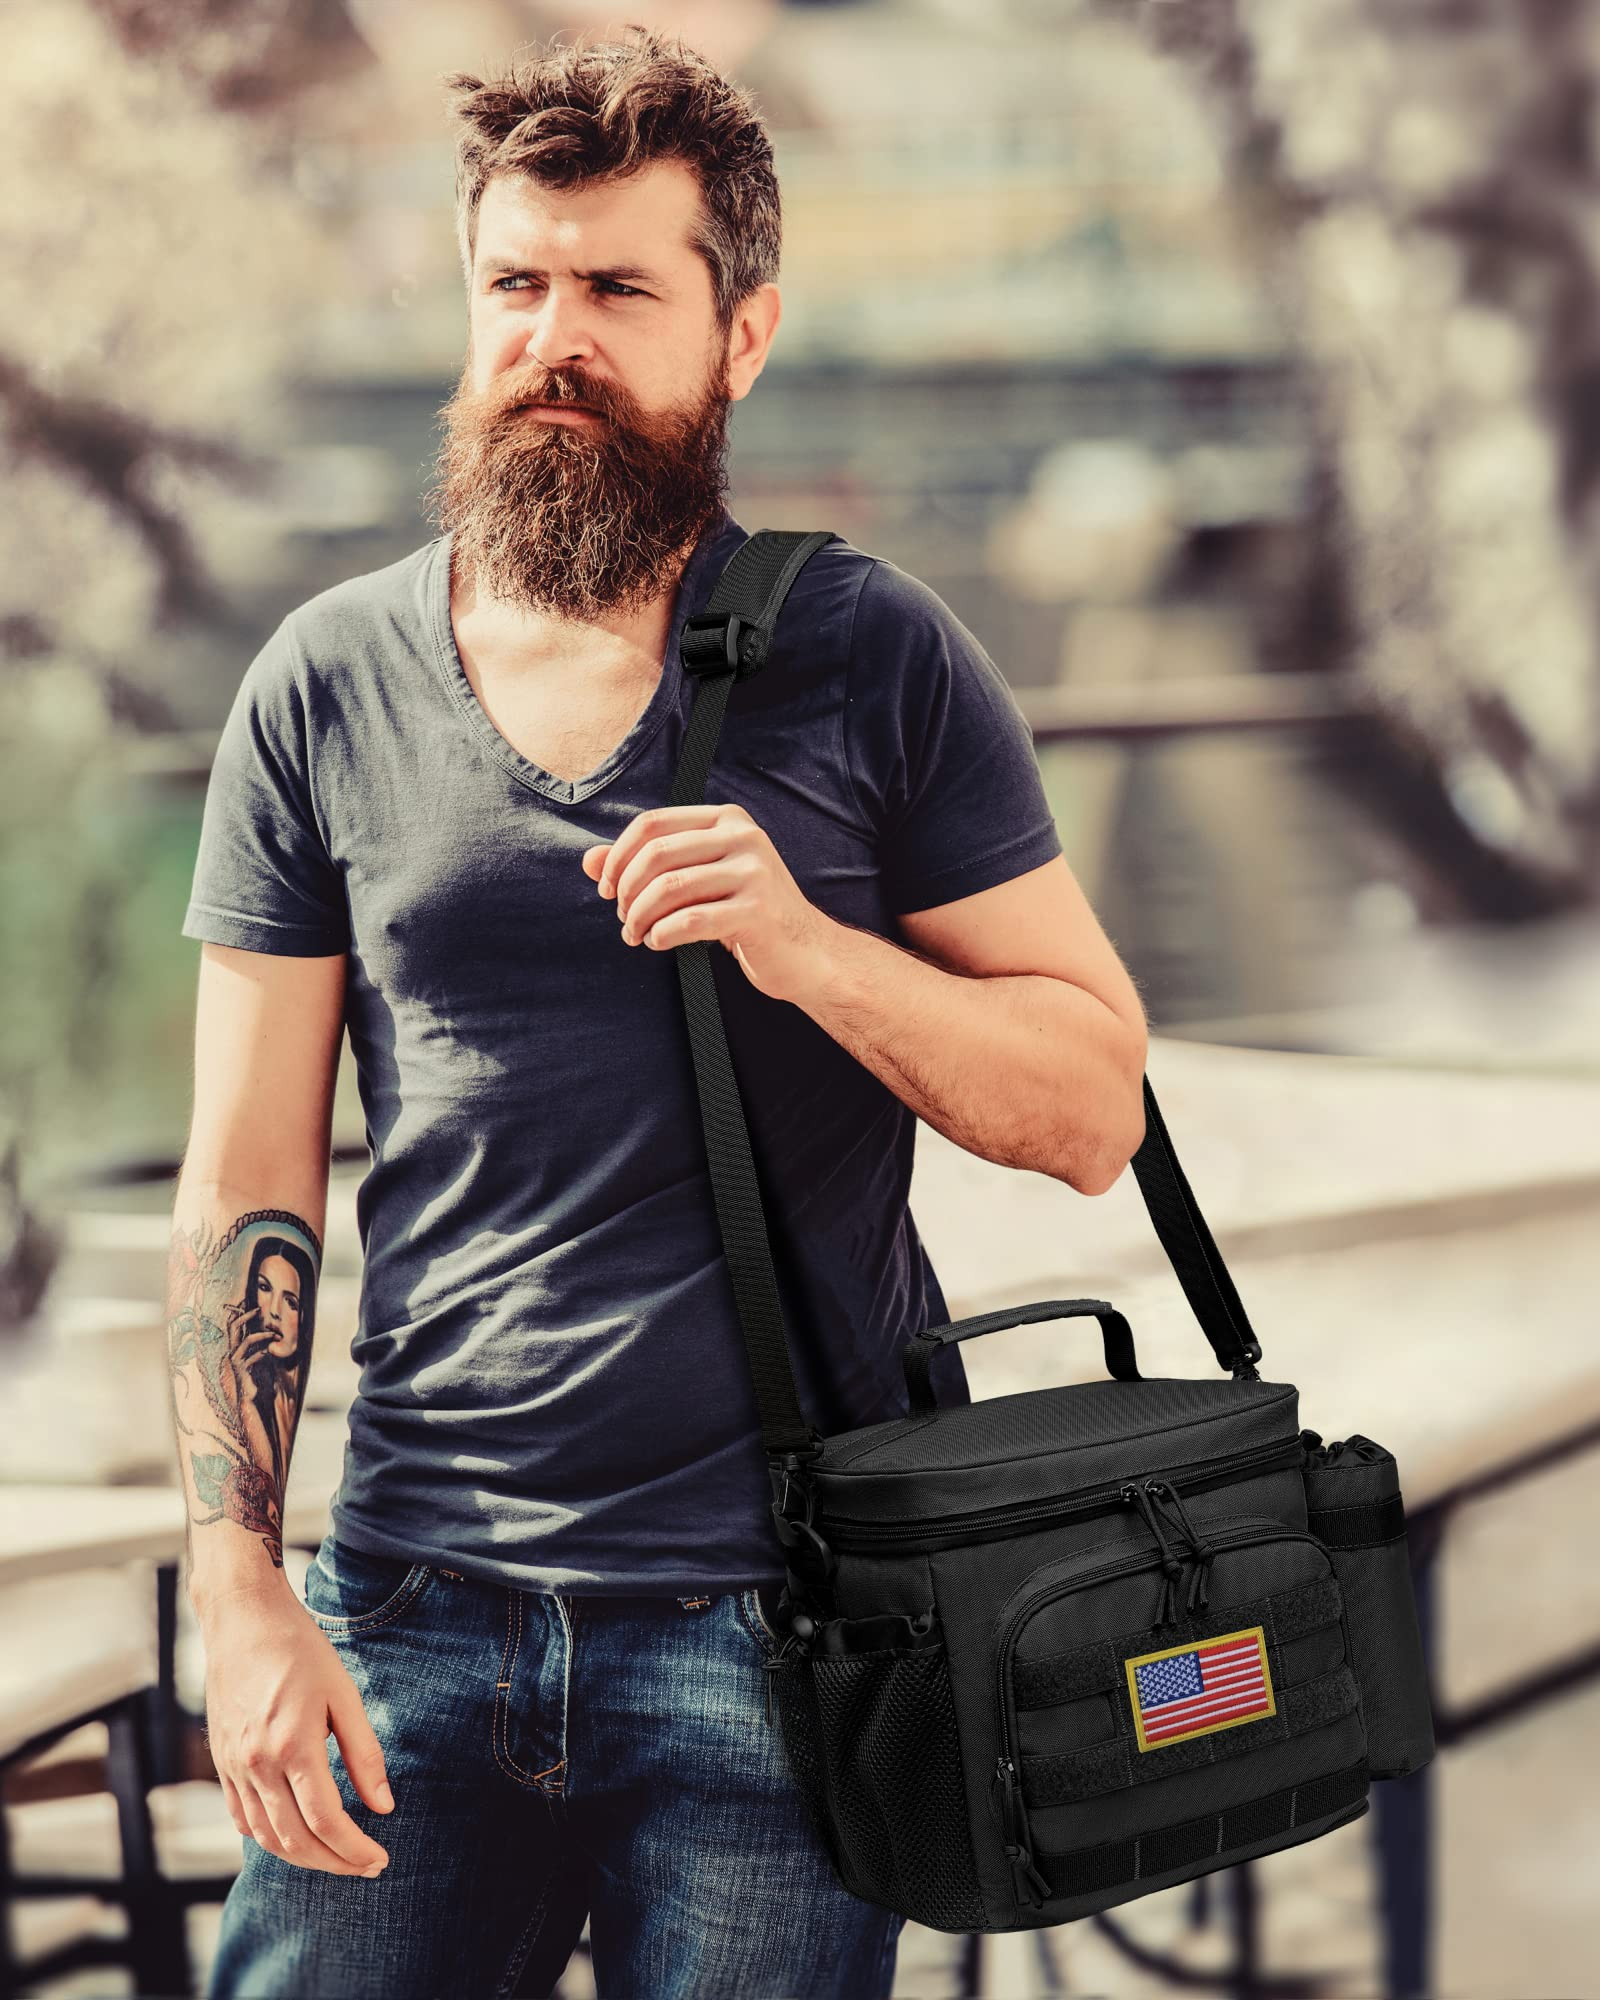 TBL04 Insulated Lunch Bag Tactical Soft Cooler Bag for Men